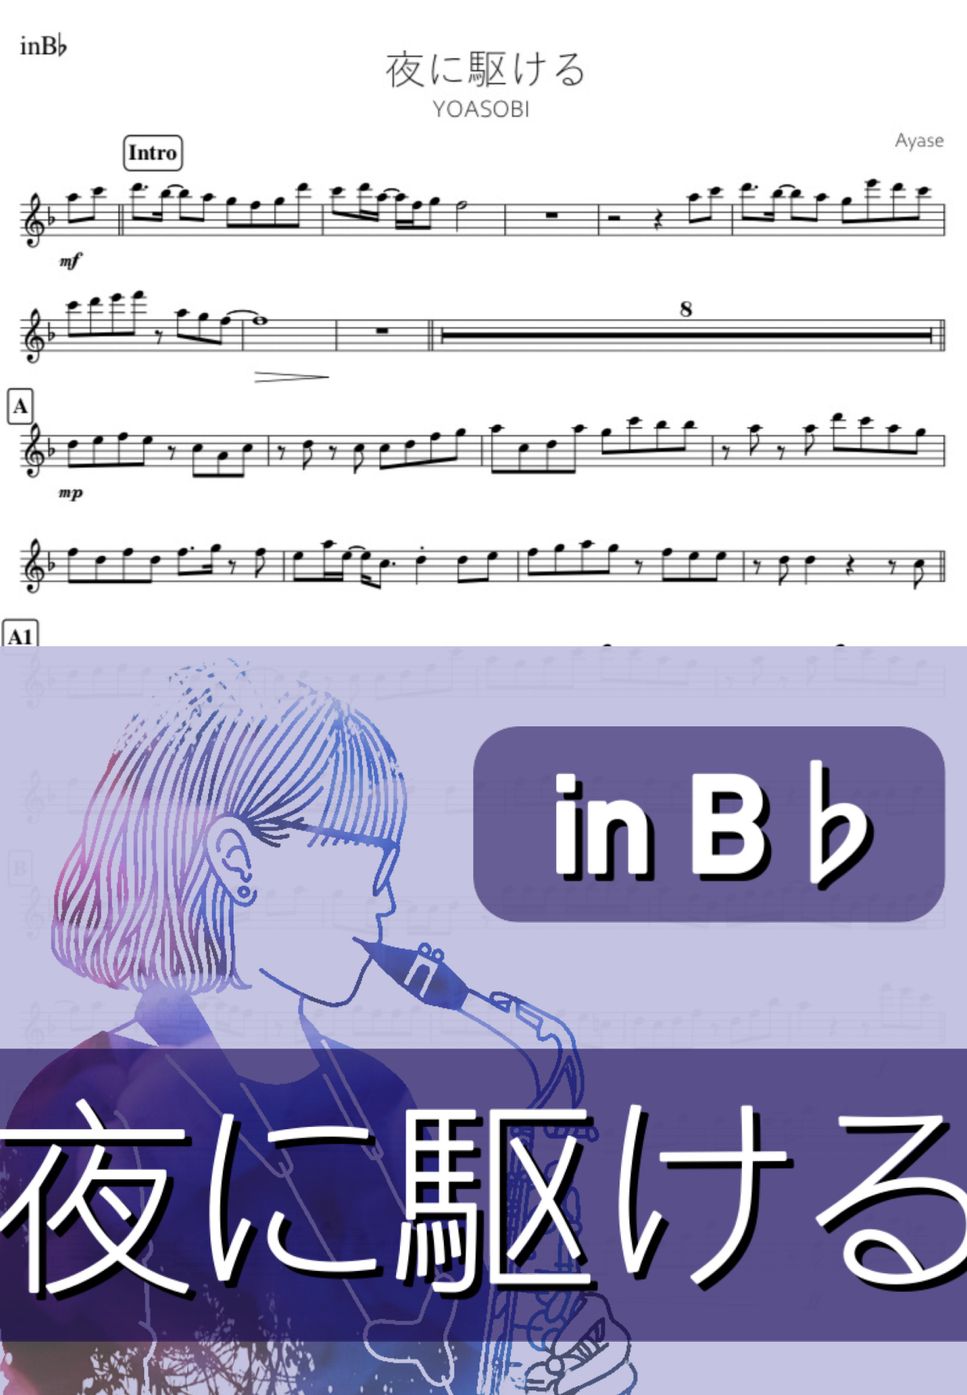 YOASOBI - 夜に駆ける (B♭) by kanamusic